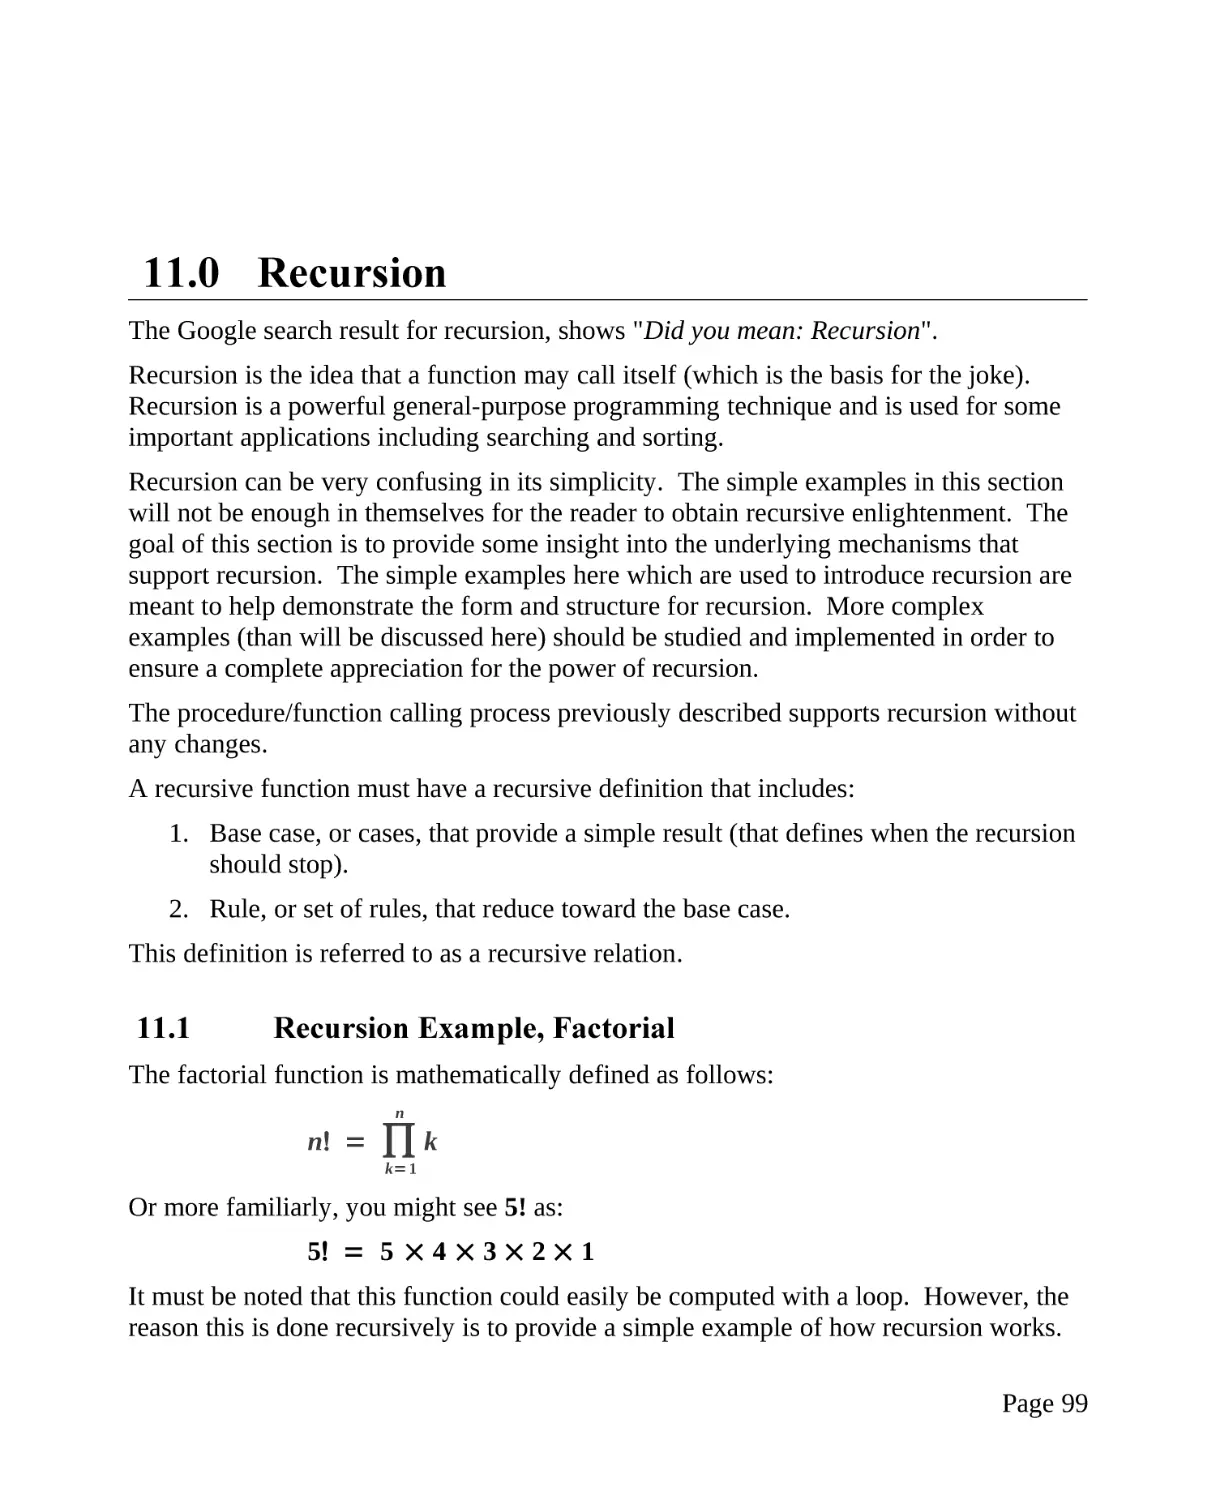 11.0 Recursion
11.1 Recursion Example, Factorial